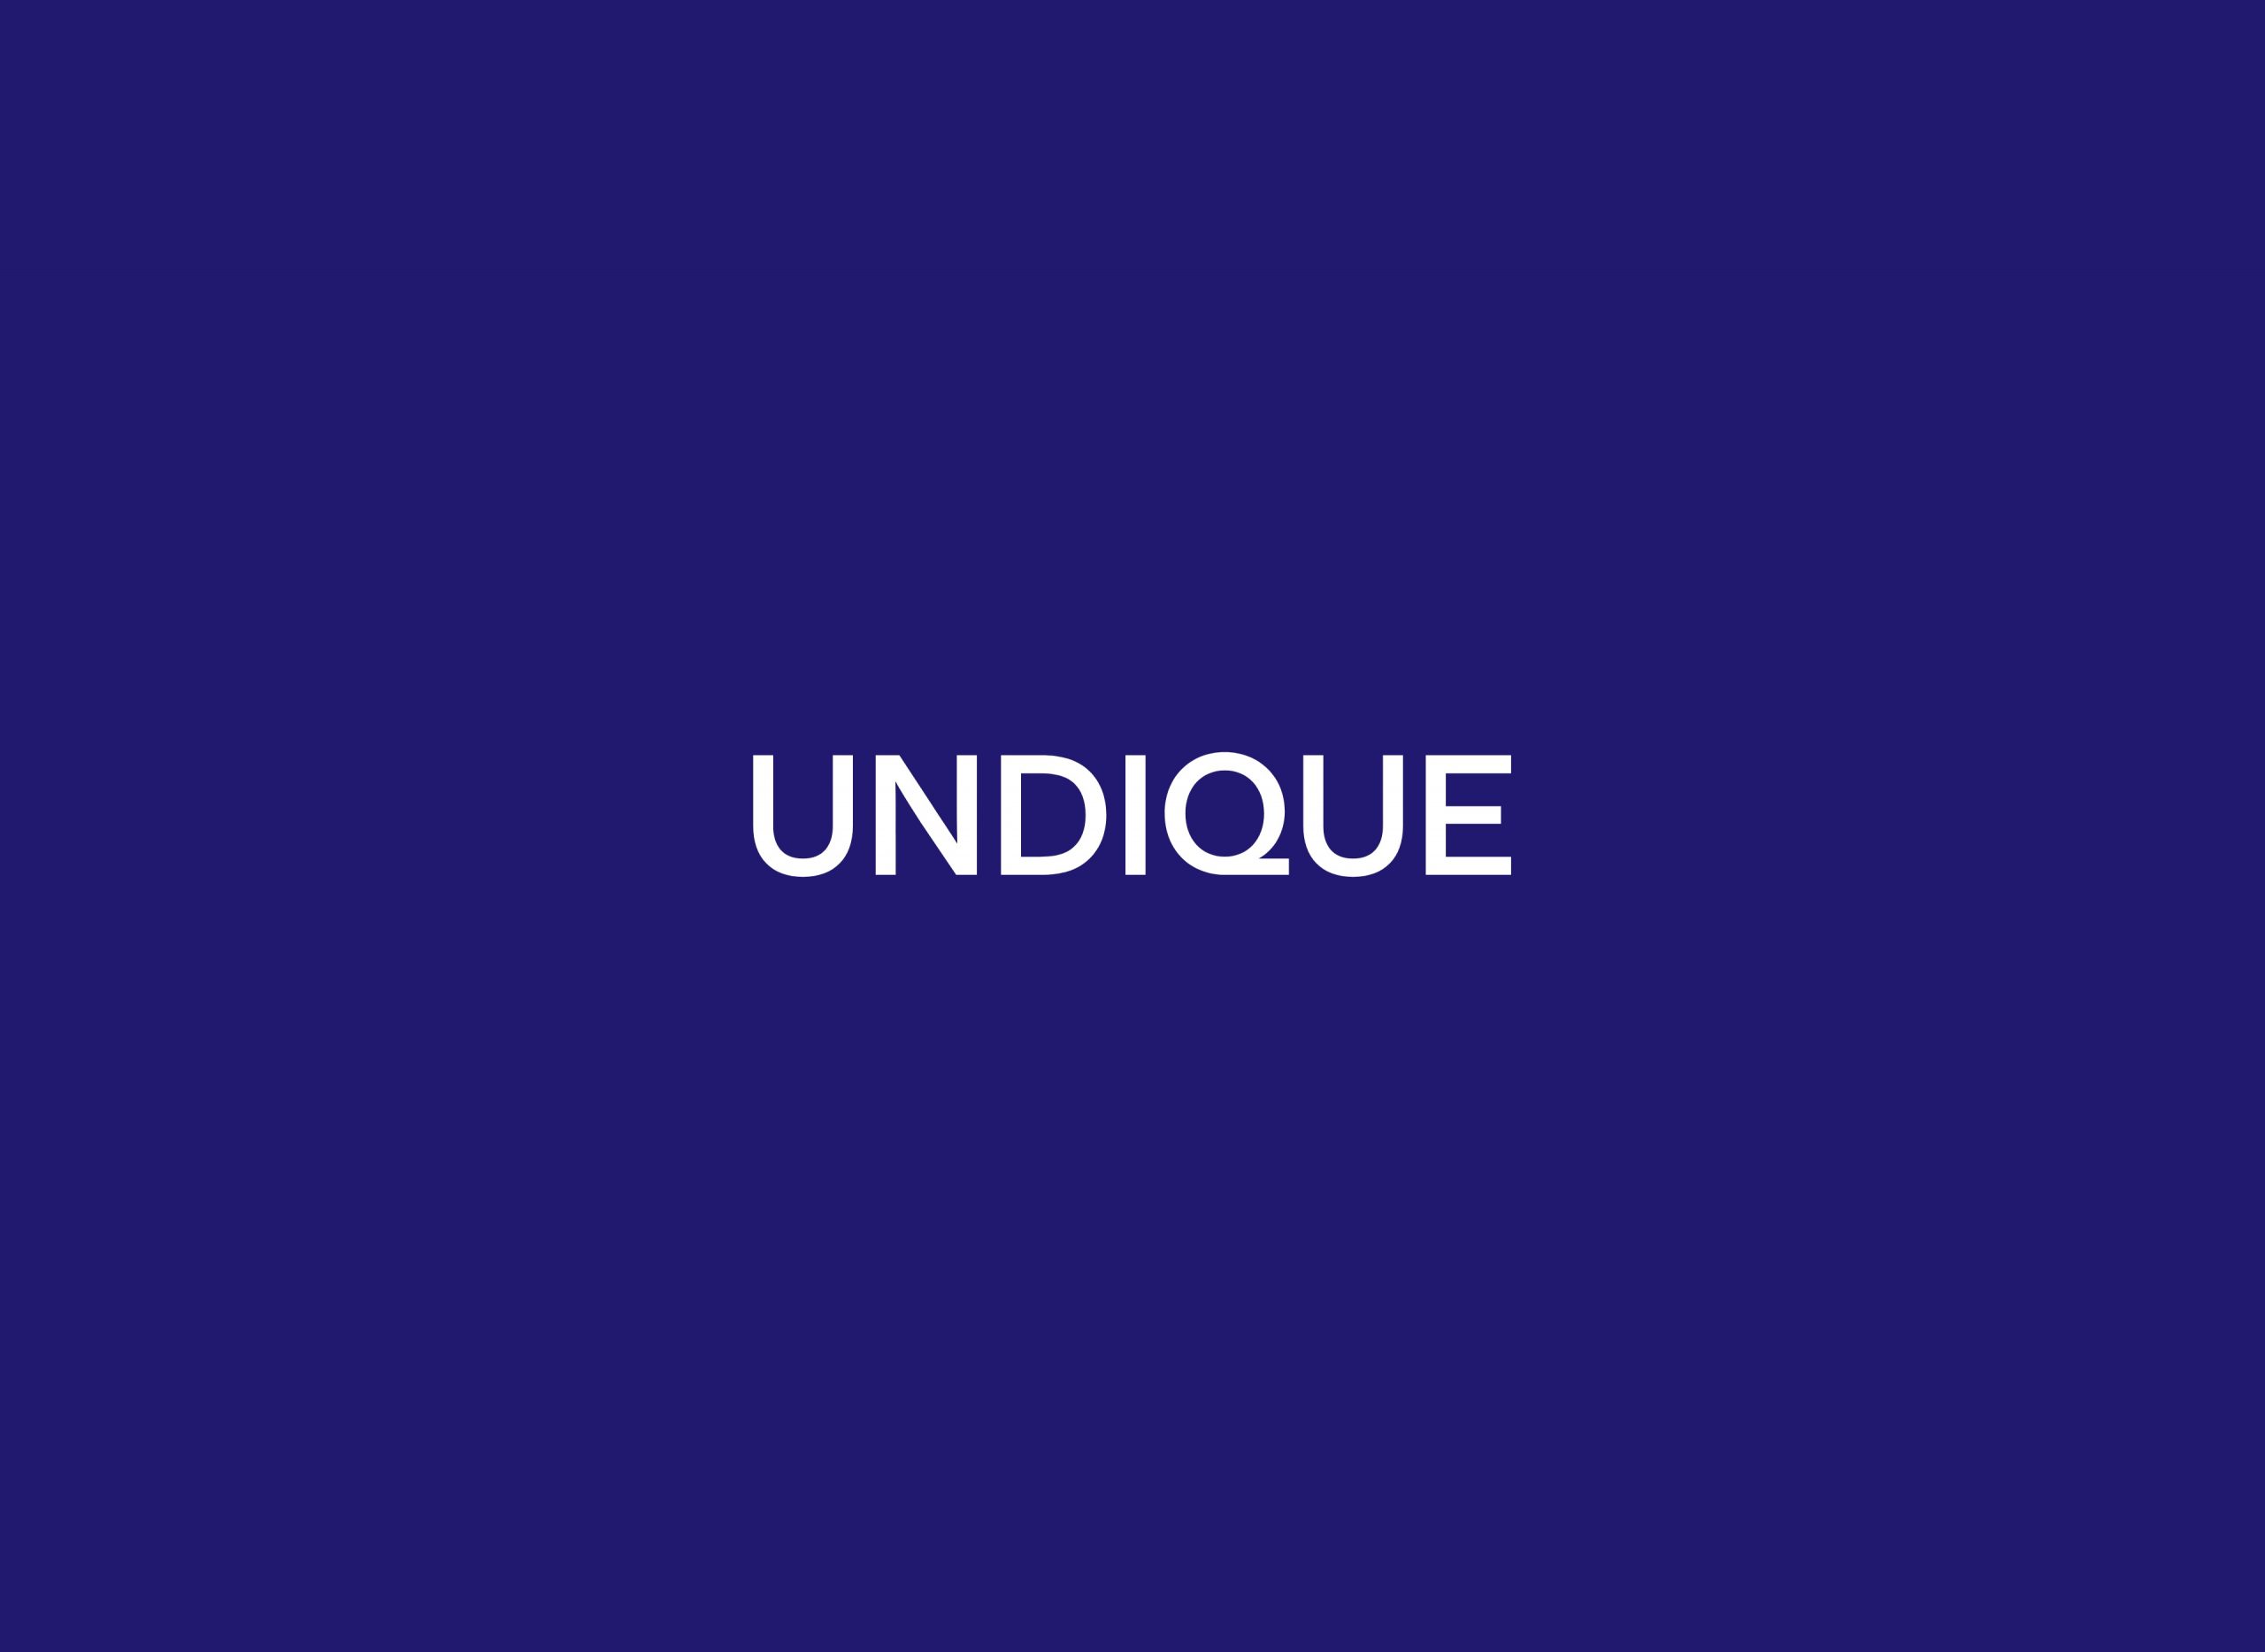 UNDIQUE – Branding for Digital Marketing Agency